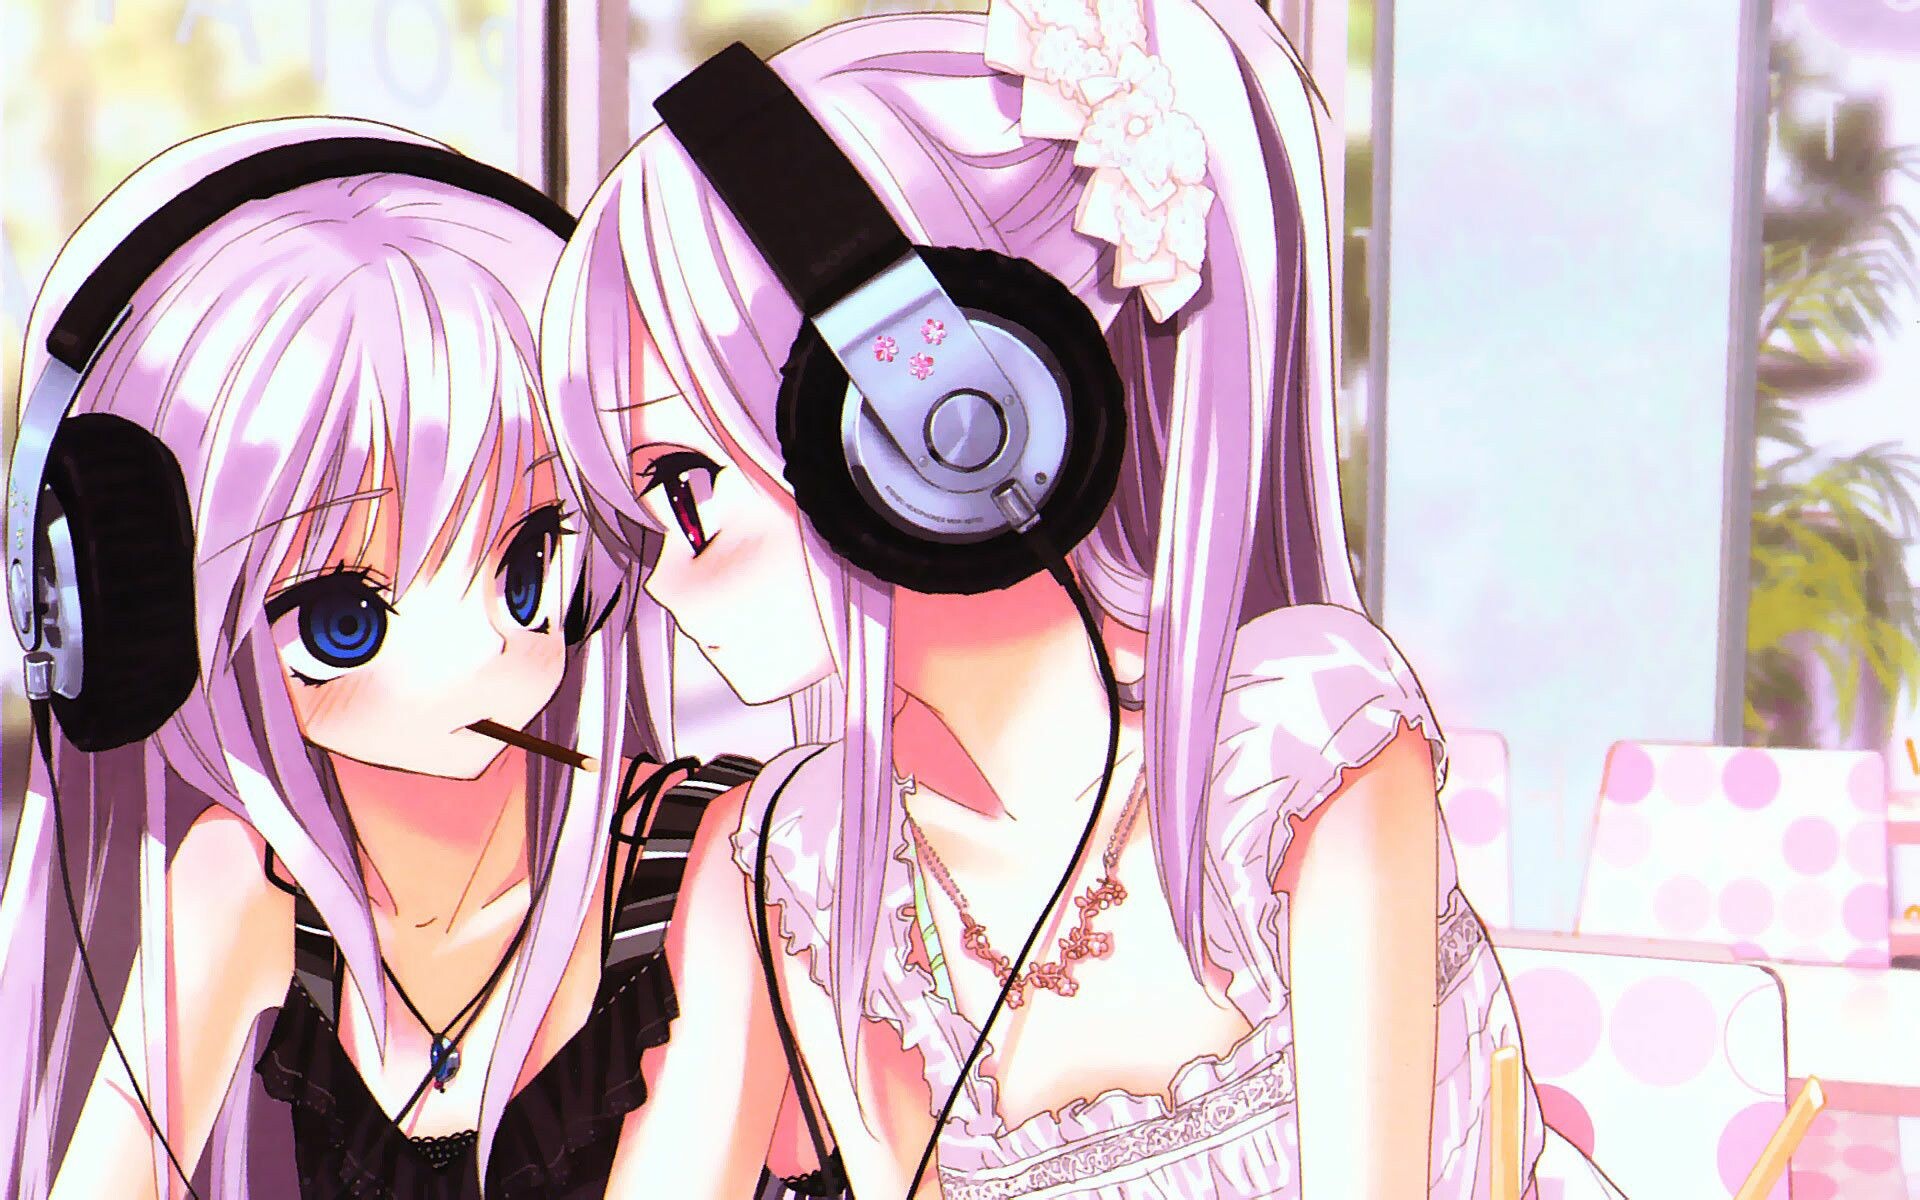 Download wallpaper 800x600 neko girl ears cats cute anime pocket pc  pda hd background